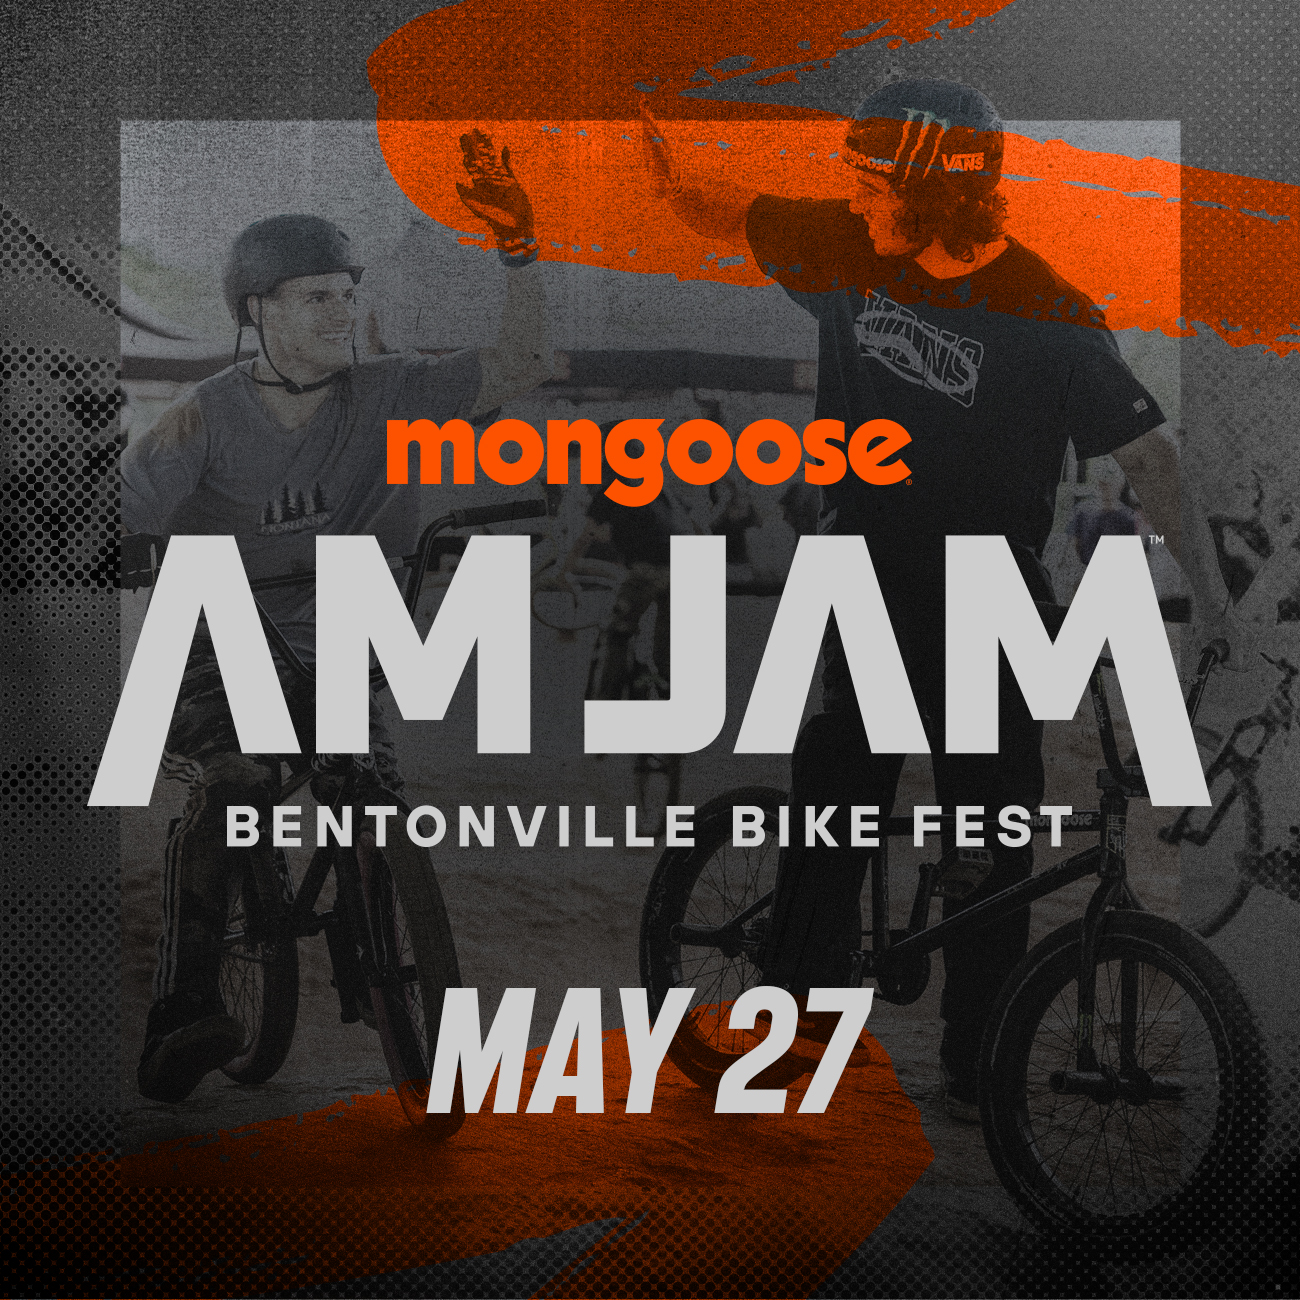 Bentonville Bike Fest image 1